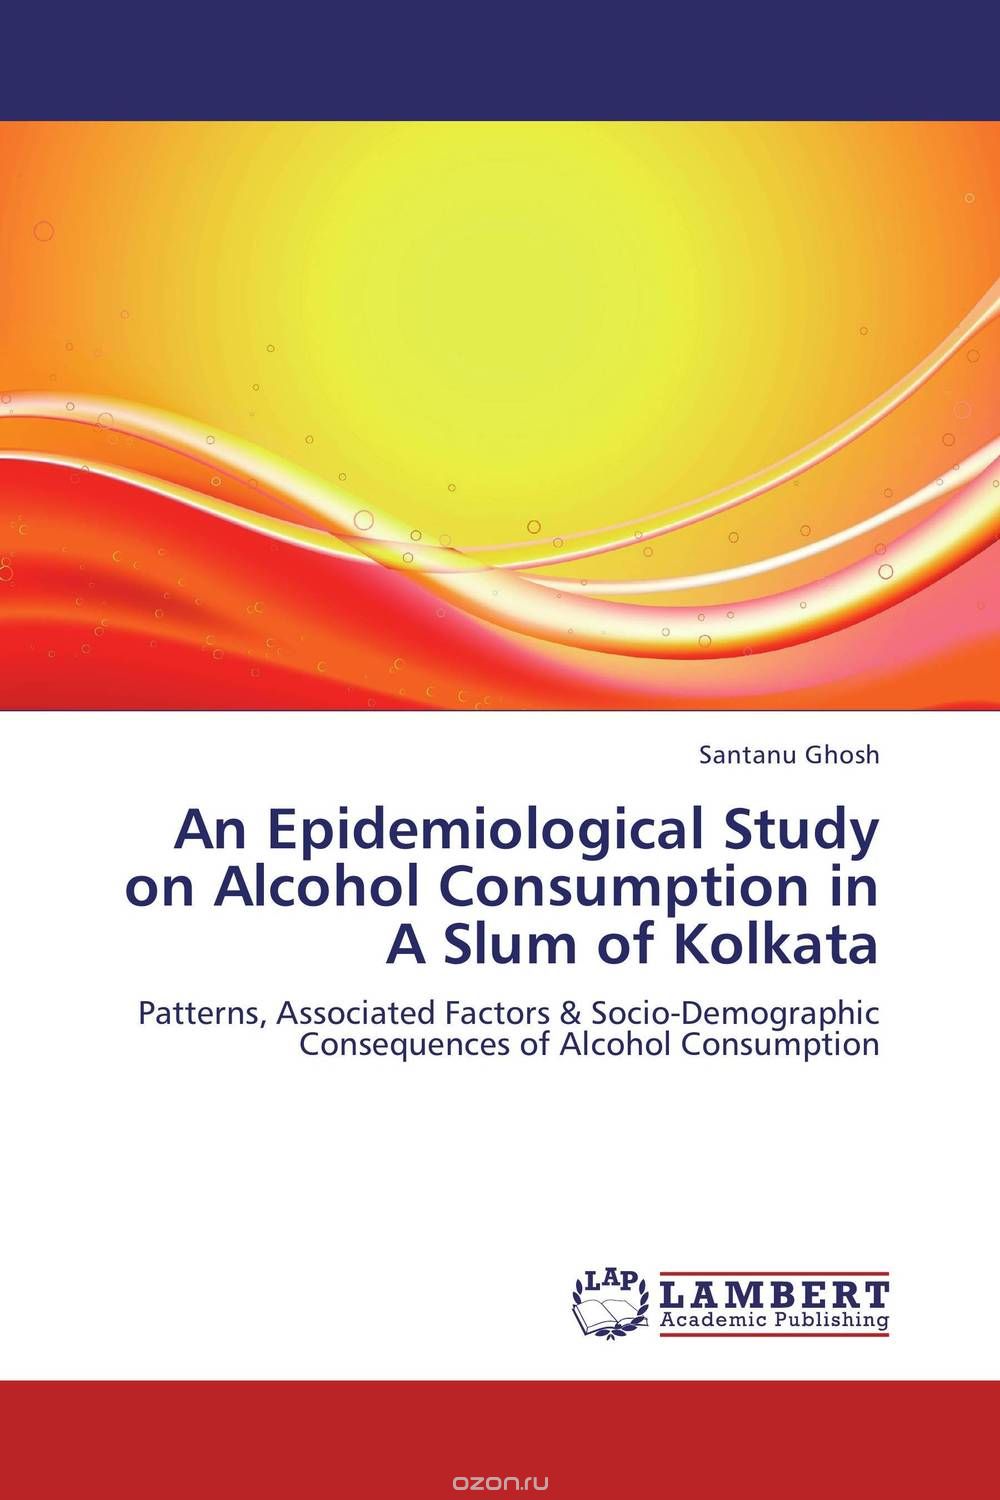 Скачать книгу "An Epidemiological Study on Alcohol Consumption in A Slum of Kolkata"